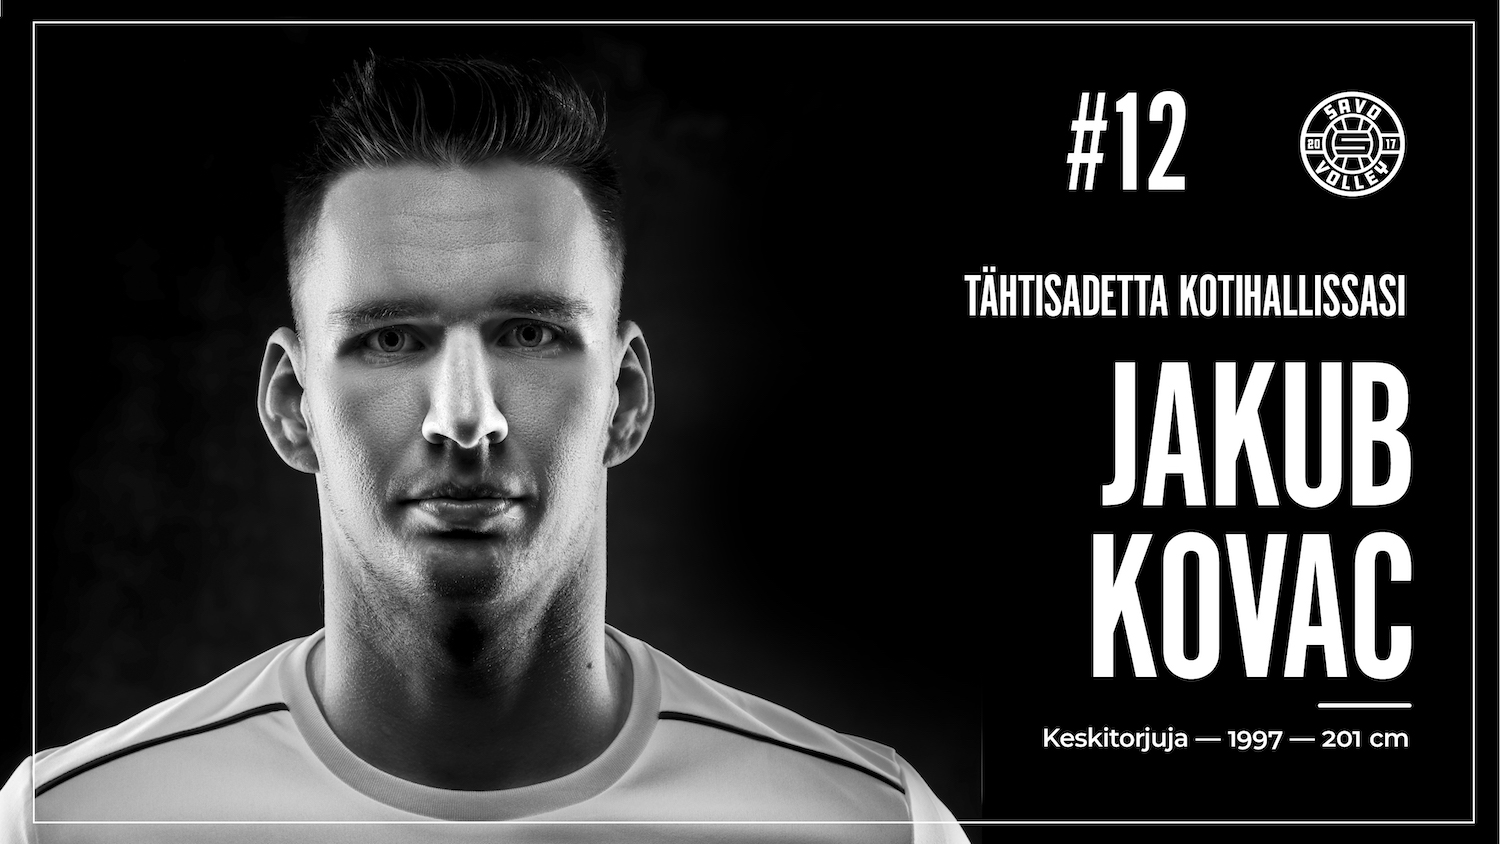 Jakub Kovac